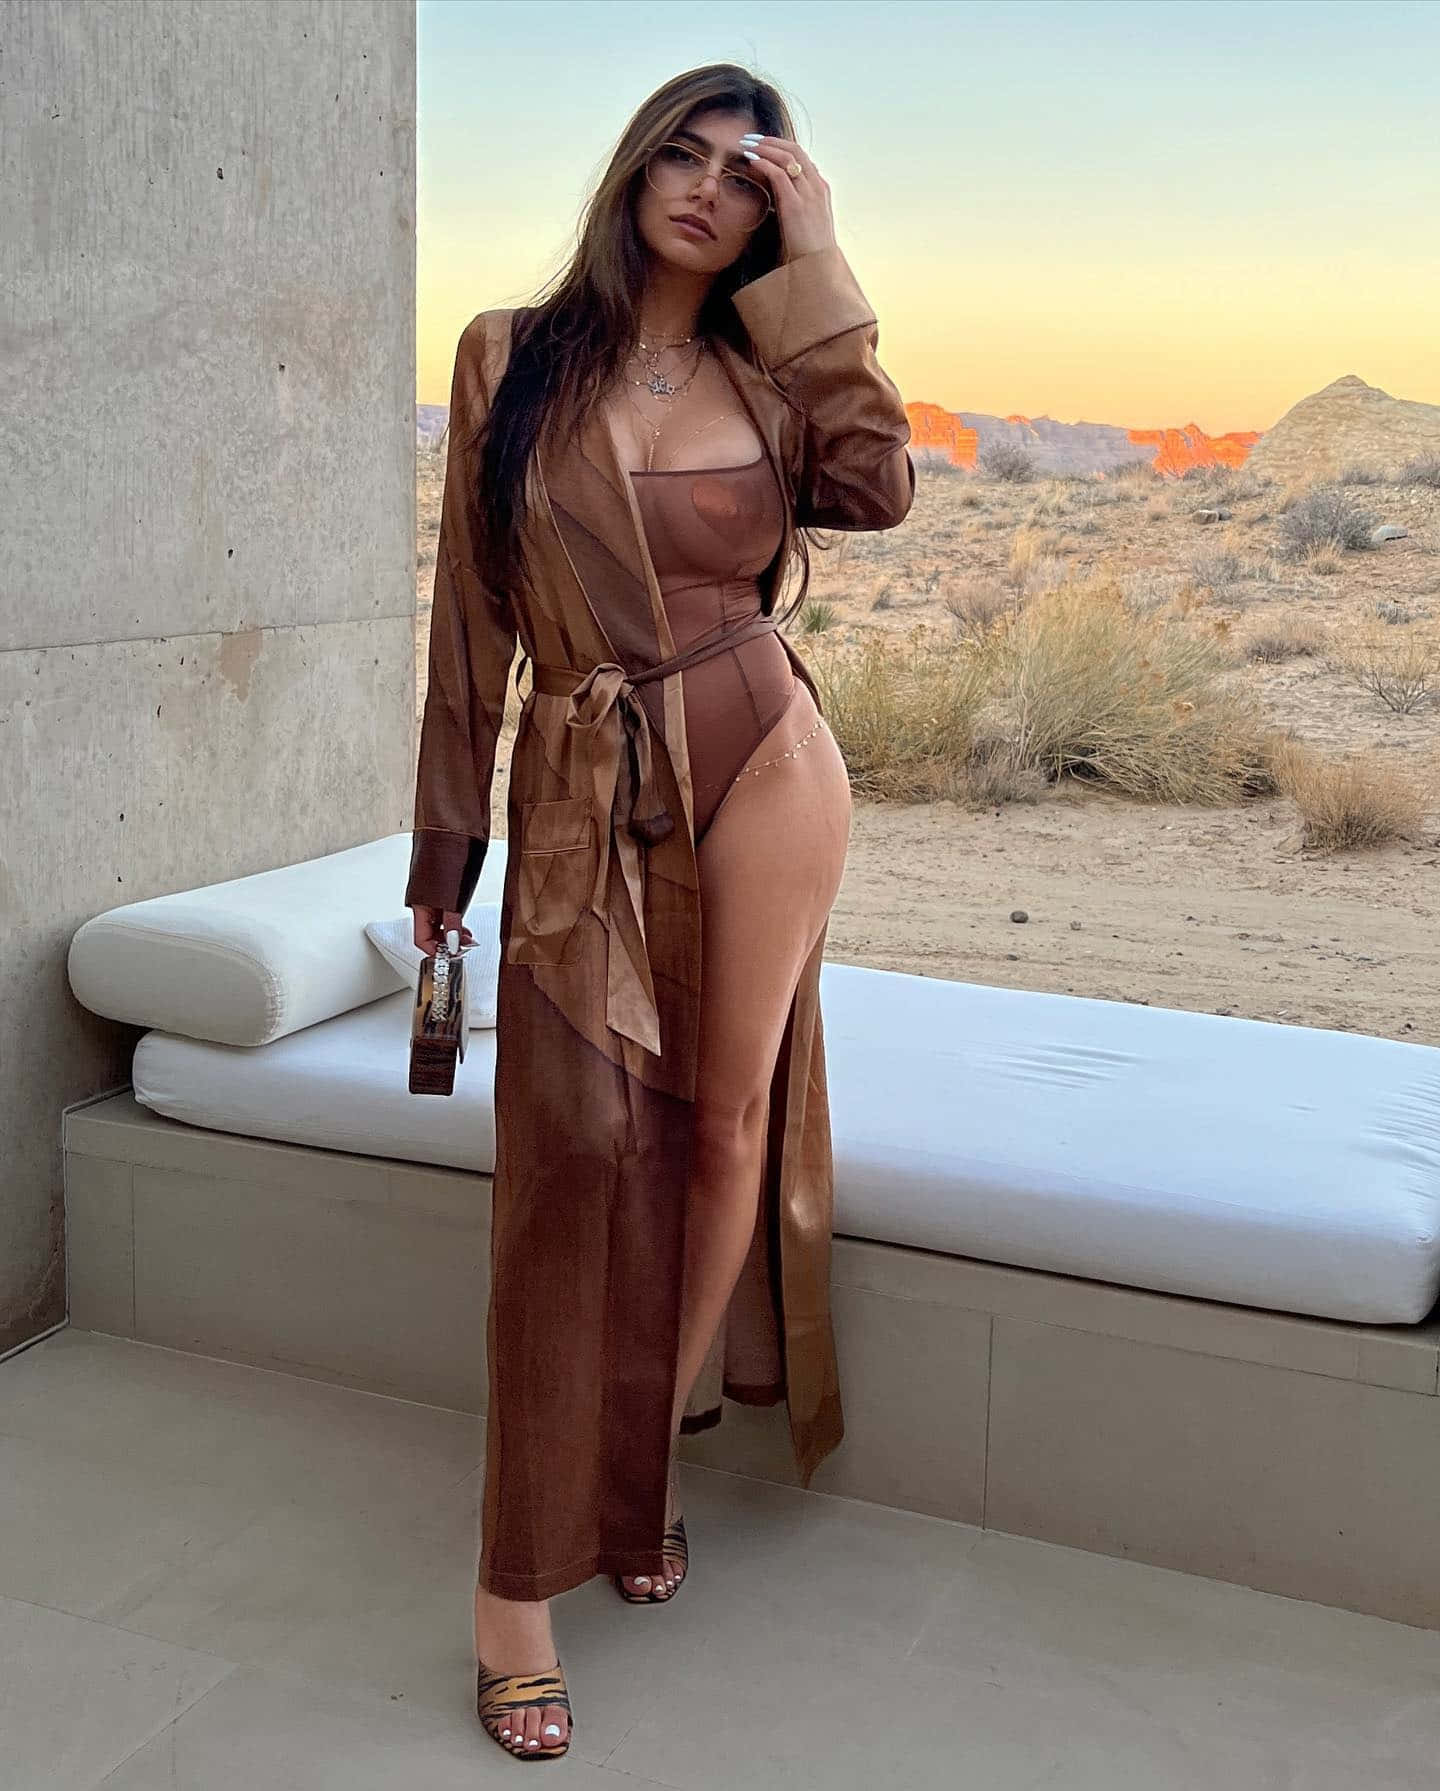 A Woman In A Brown Bodysuit Posing In The Desert